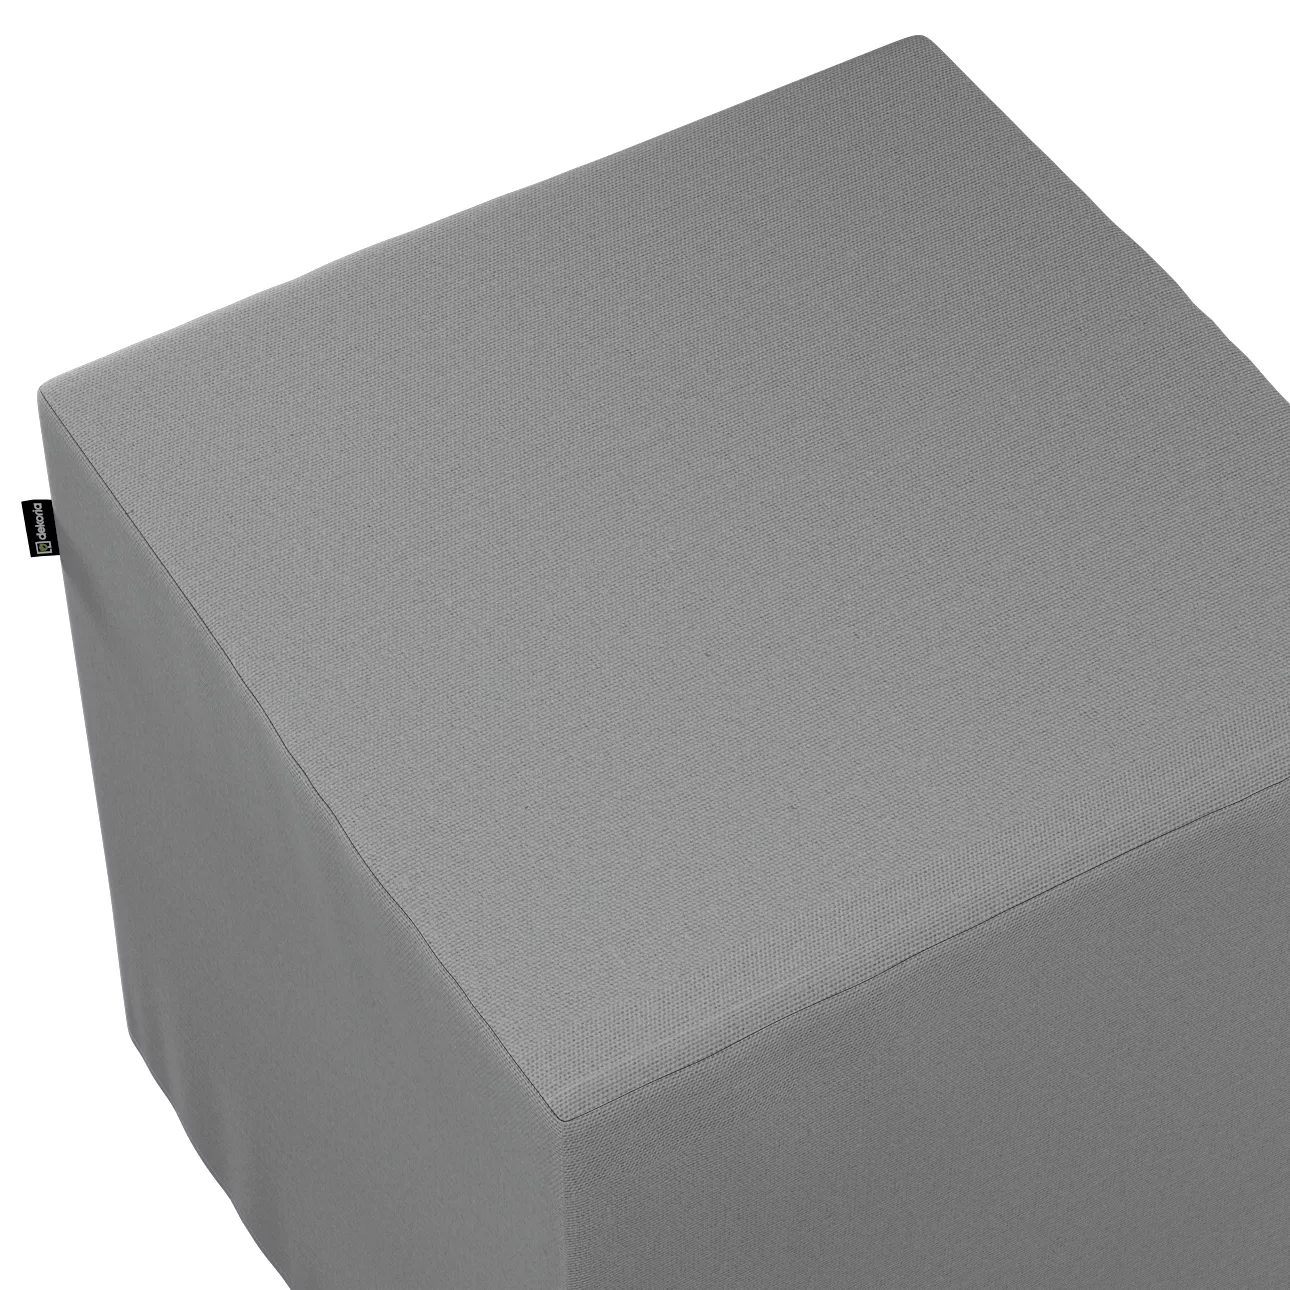 Bezug für Sitzwürfel, grau, Bezug für Sitzwürfel 40 x 40 x 40 cm, Loneta (1 günstig online kaufen